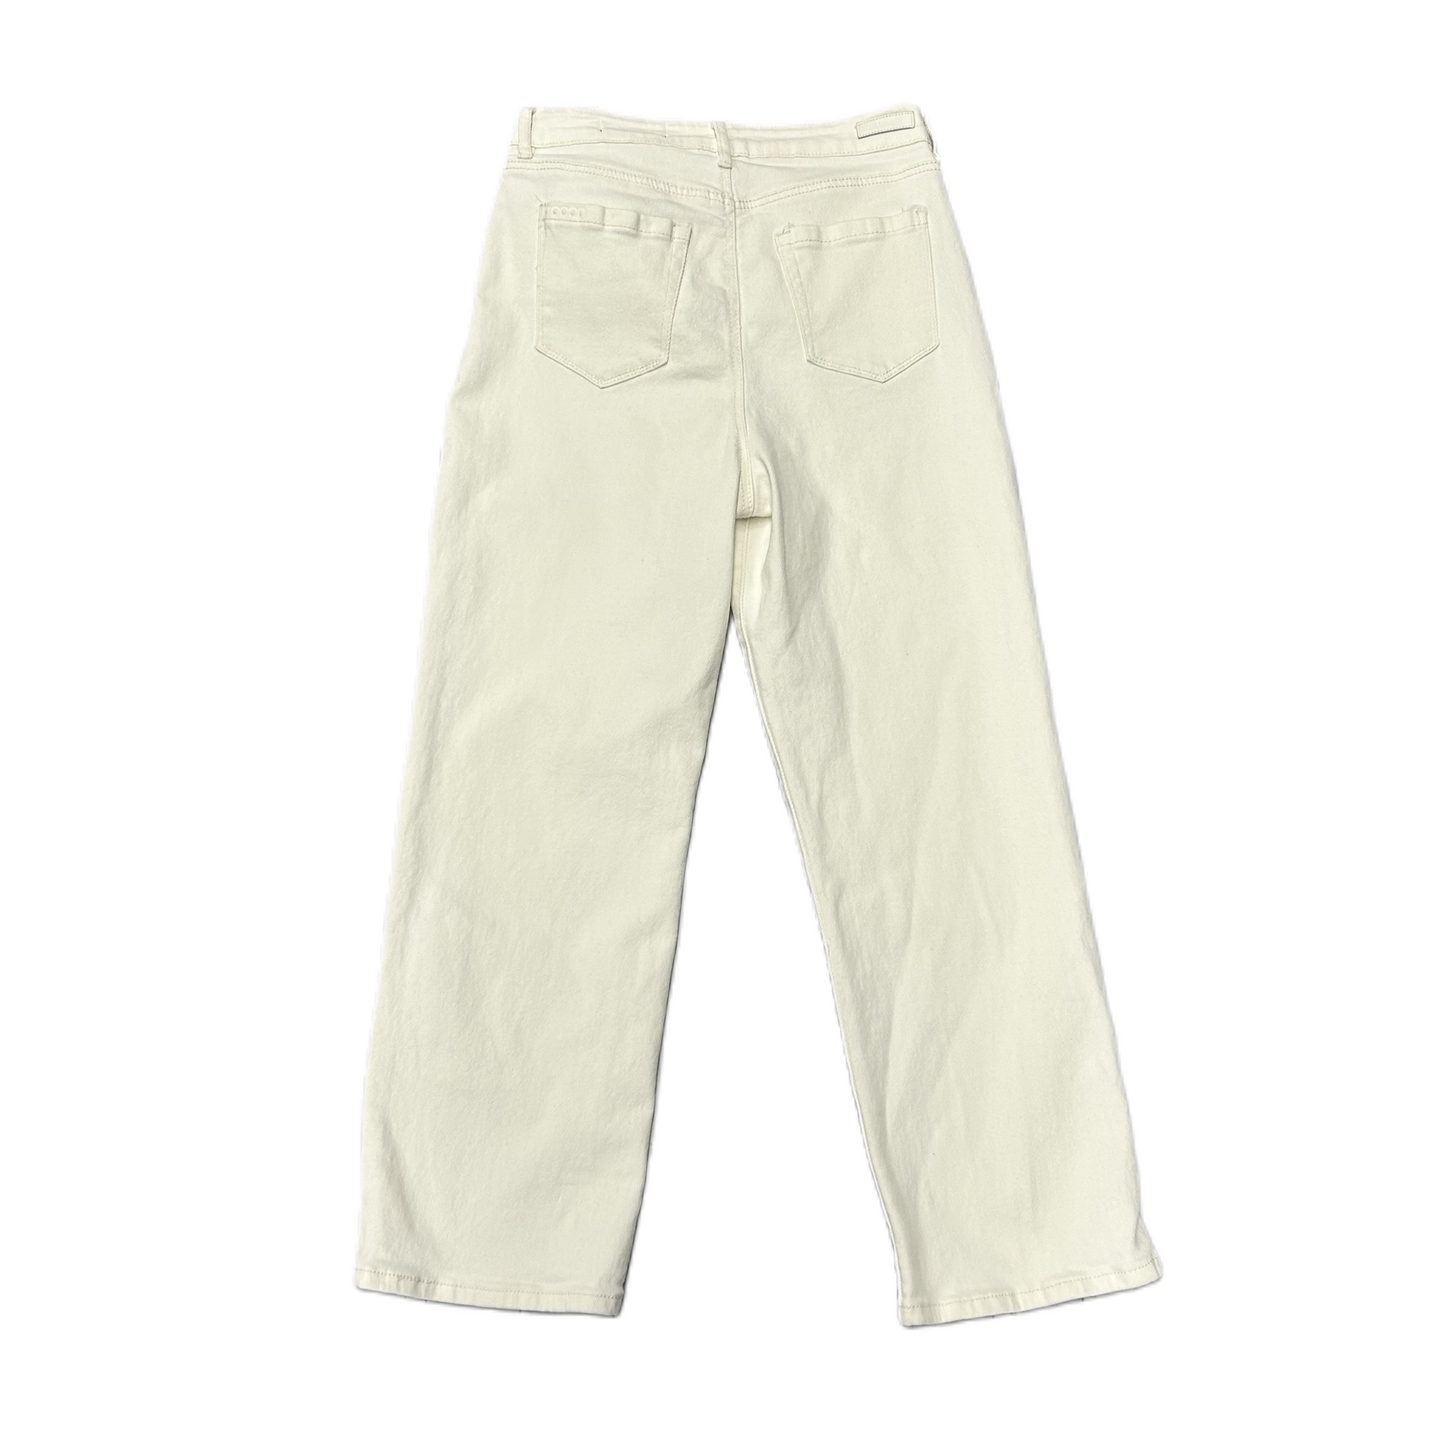 White Jeans Boyfriend By Blanknyc, Size: 10